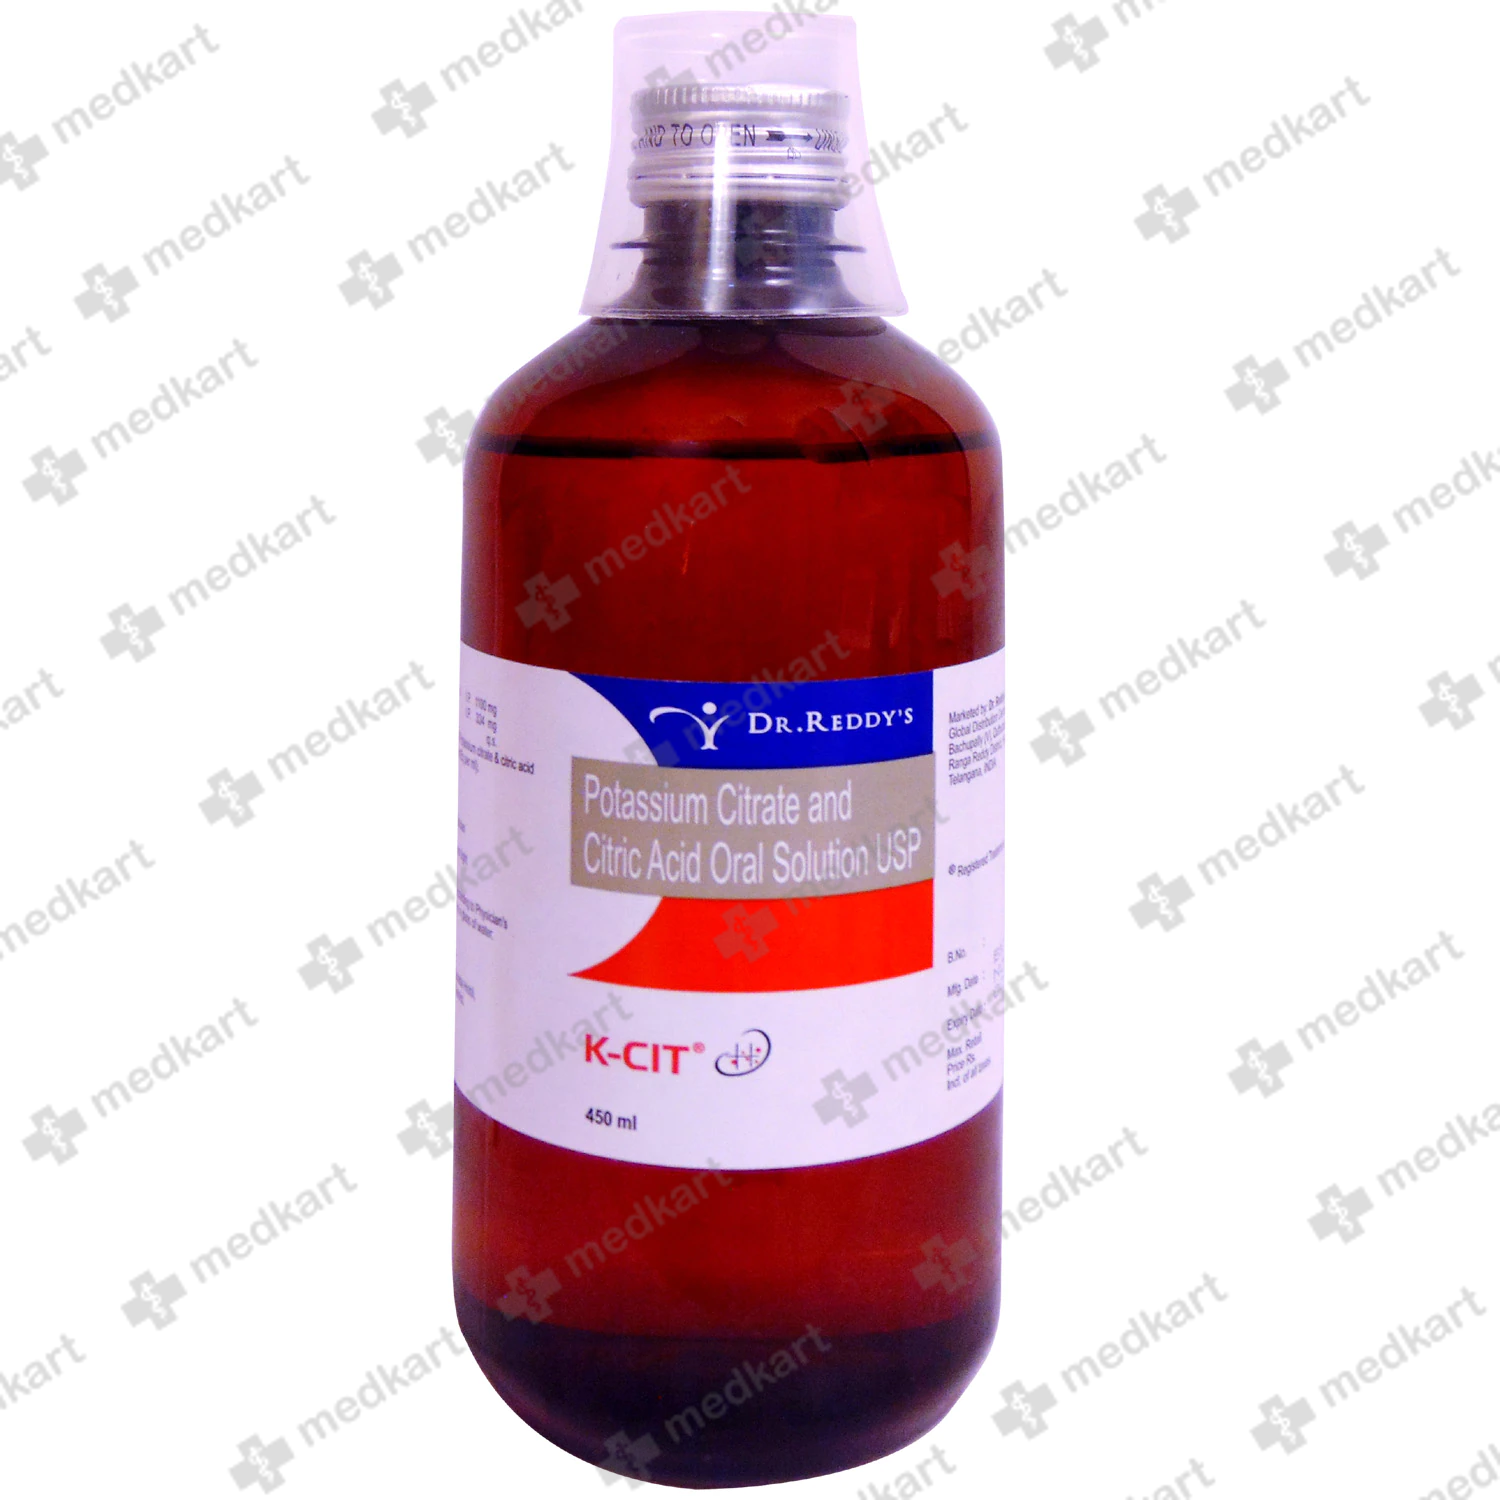 k-cit-syrup-450-ml